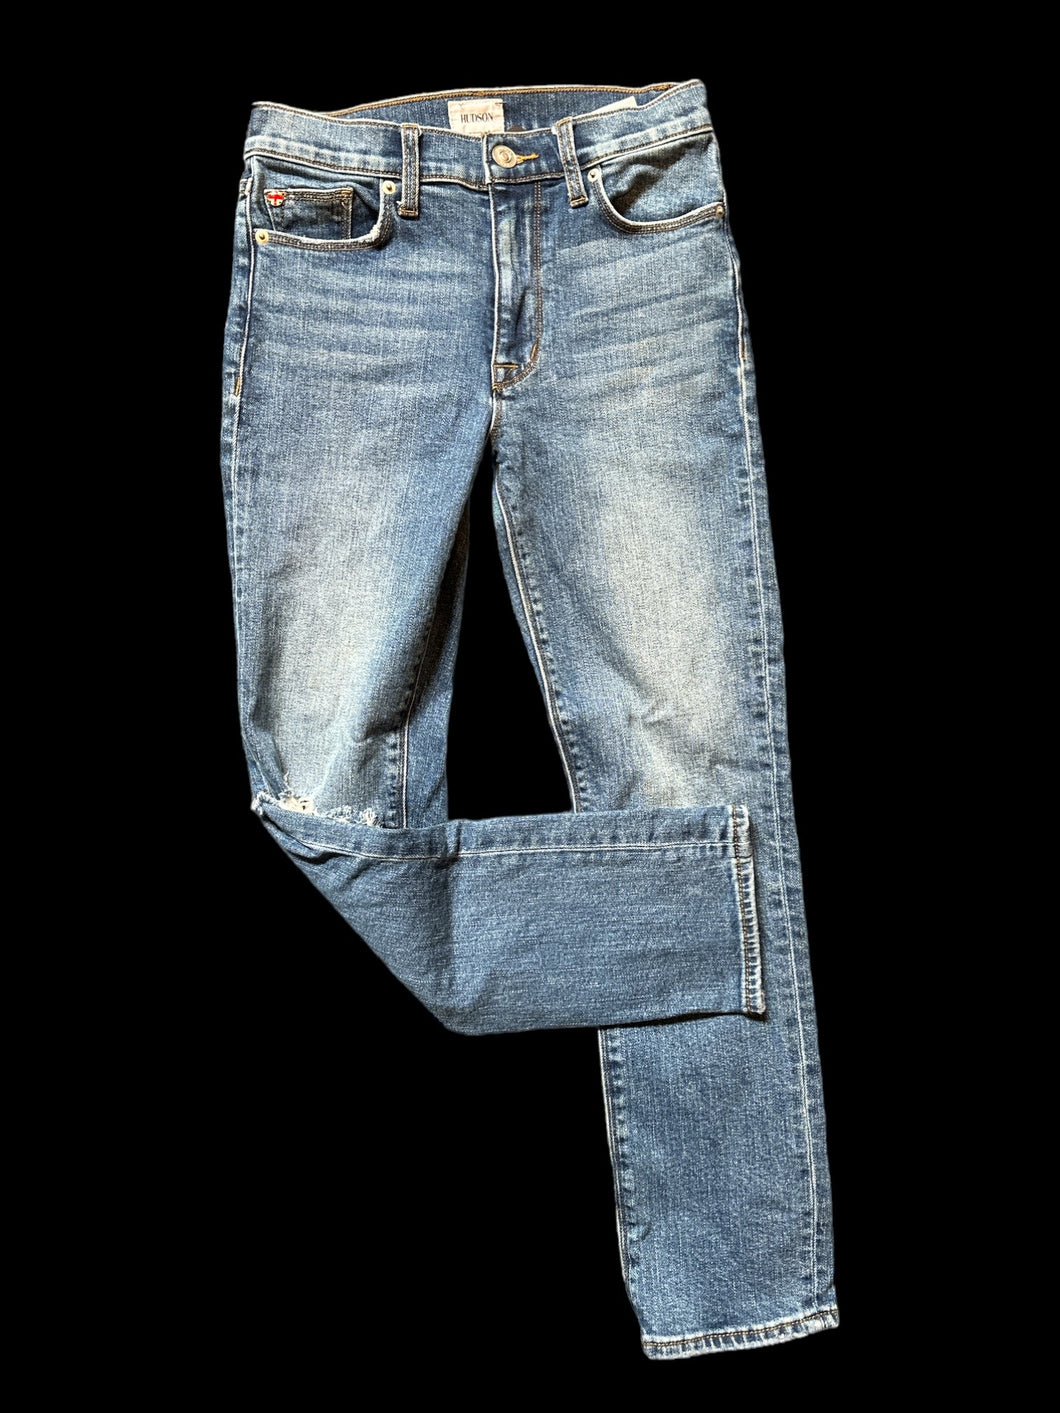 S Blue denim jeans w/ union jack, emblem, Ripped knees, belt loops, pockets, & button/zipper closure